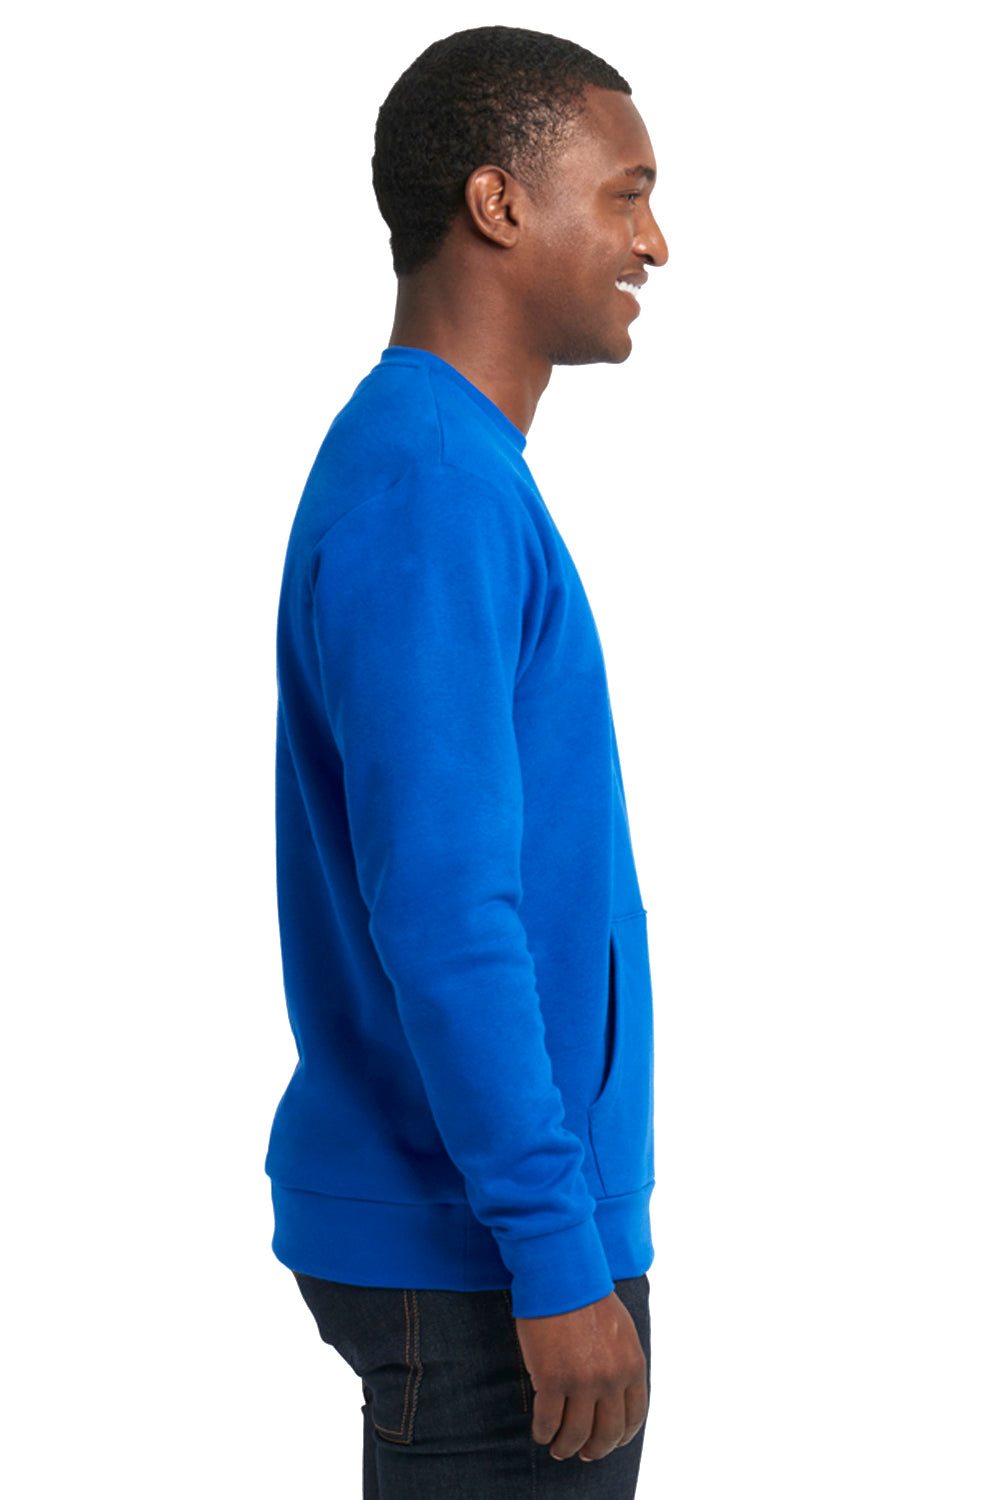 Next Level 9001 Fleece Crewneck Sweatshirt Royal Blue Side